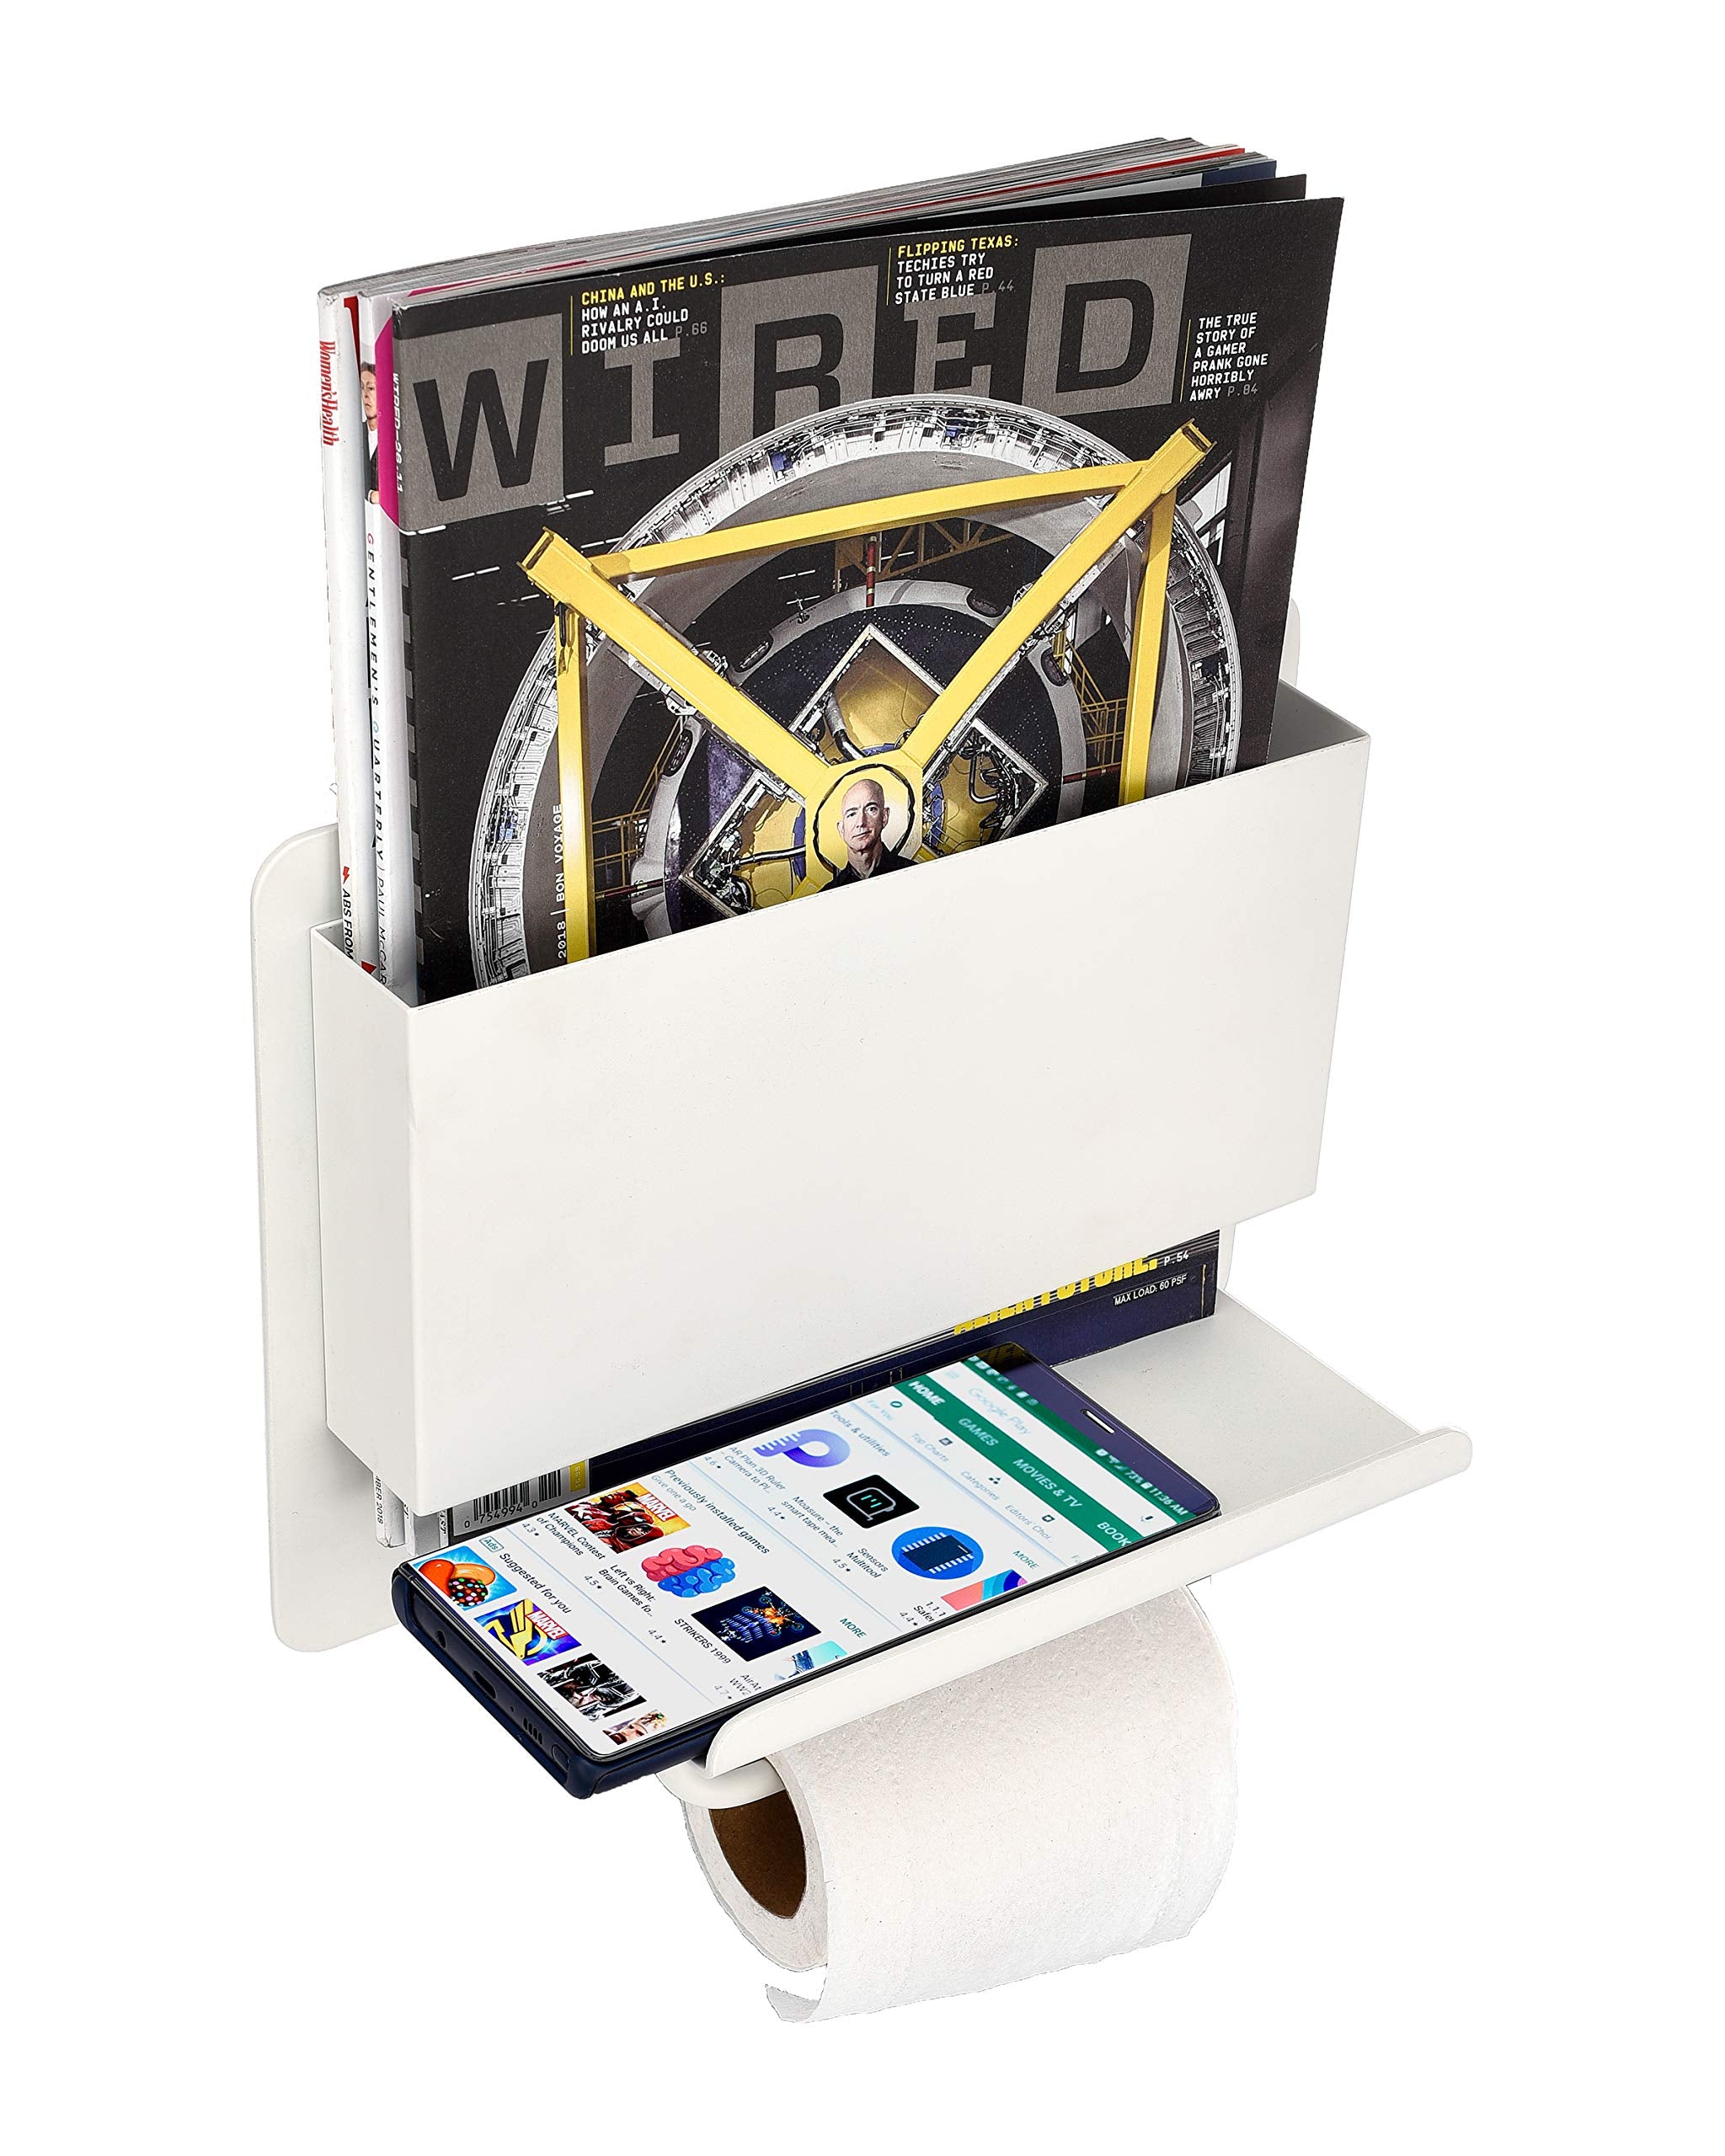 AdirHome All-in-One Bathroom Rack - Mounted Steel Toilet & Bath Organizer w/Tissue Holder - Space Saver & Organizing Storage Accessories for Bathroom & Pantry (White)  - Good